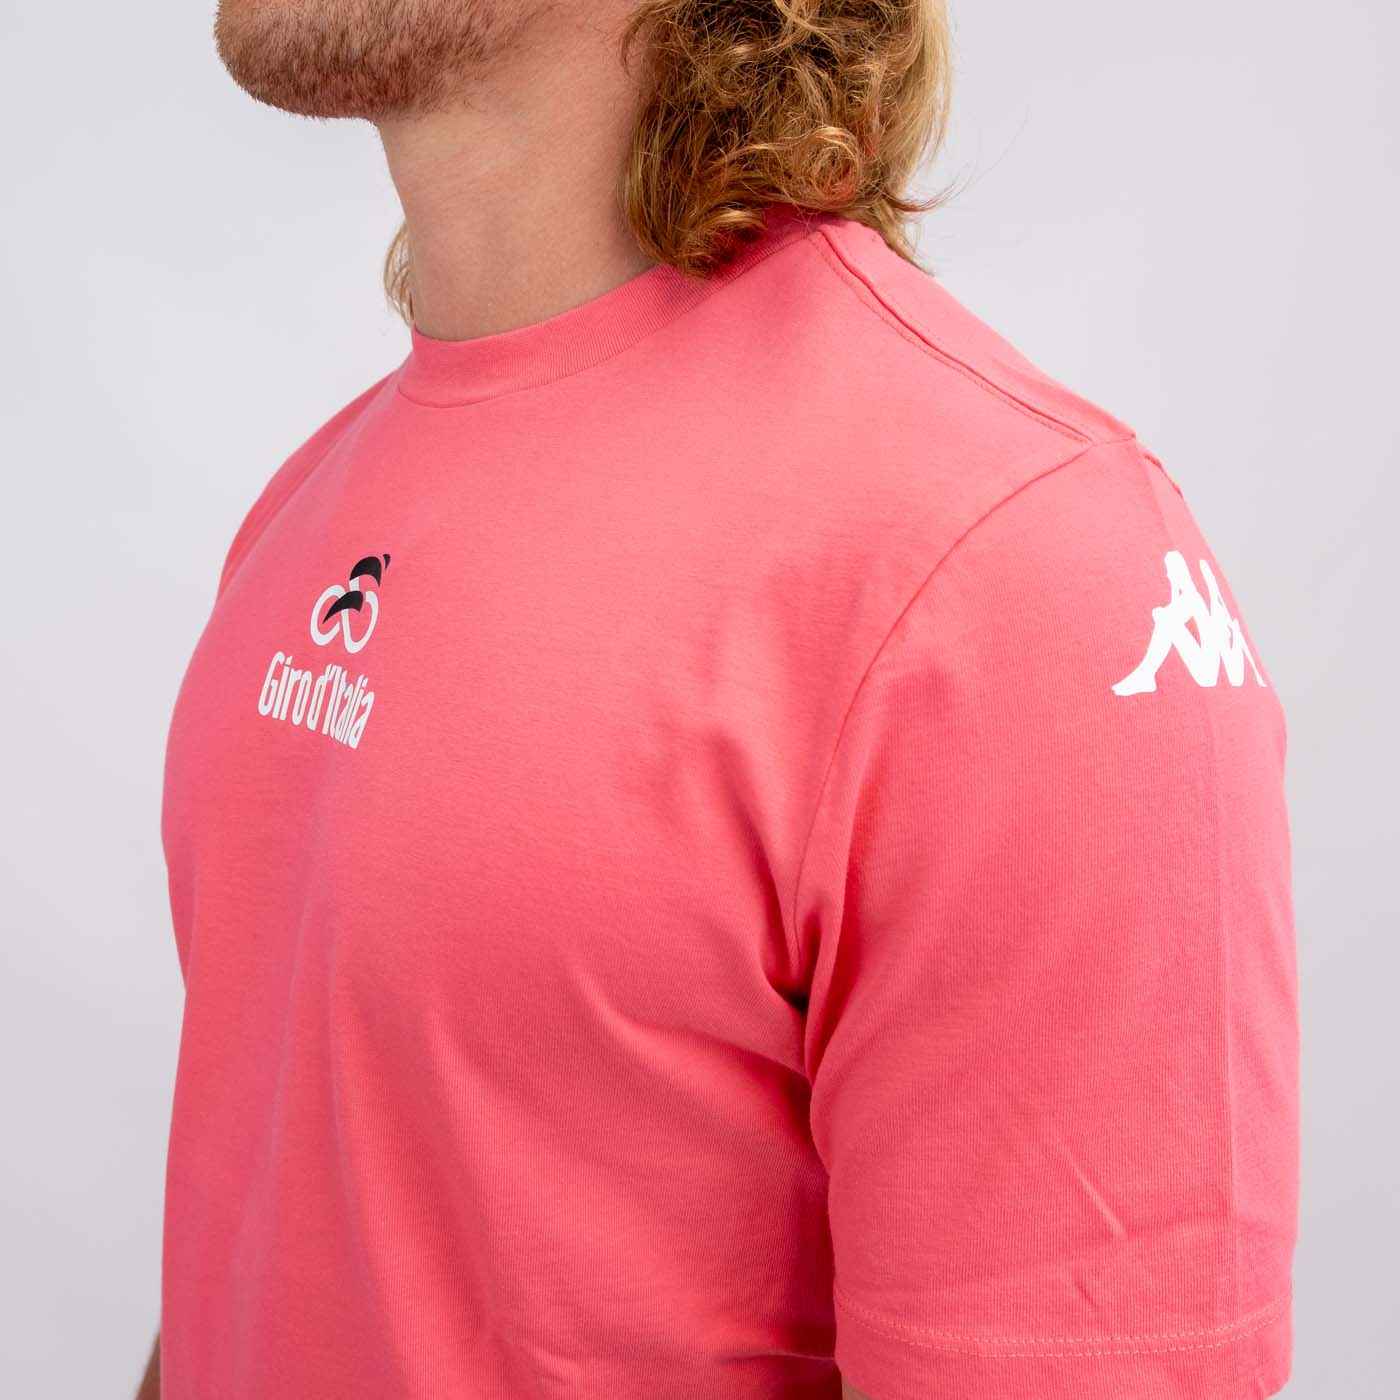 Giro d'Italia T-Shirt Eroi - Pink